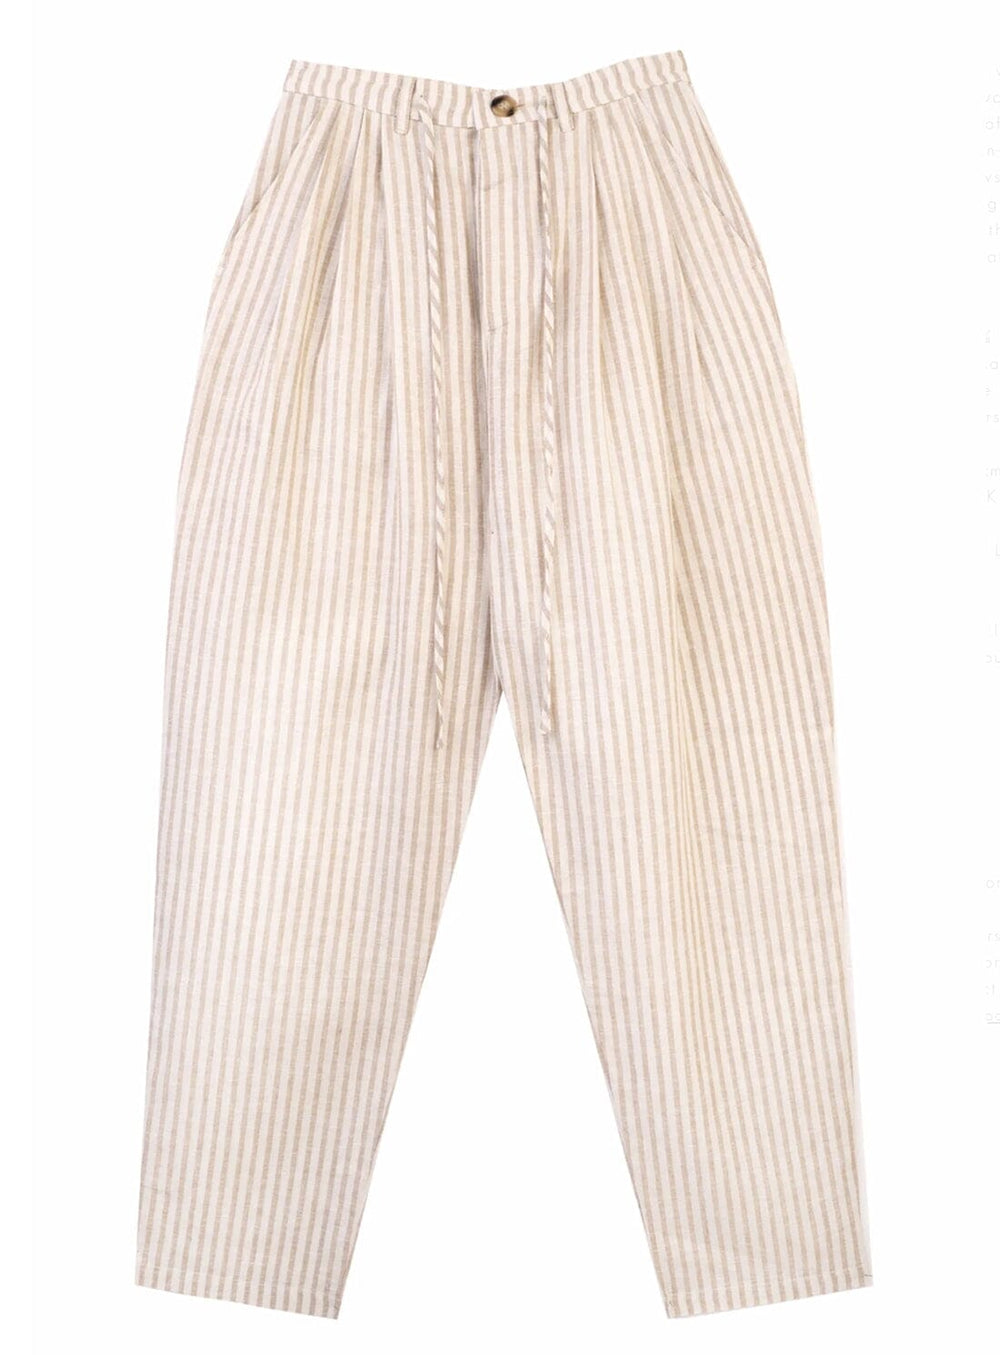 Lennon Trousers in Almond Stripe Trousers YBDFinds 